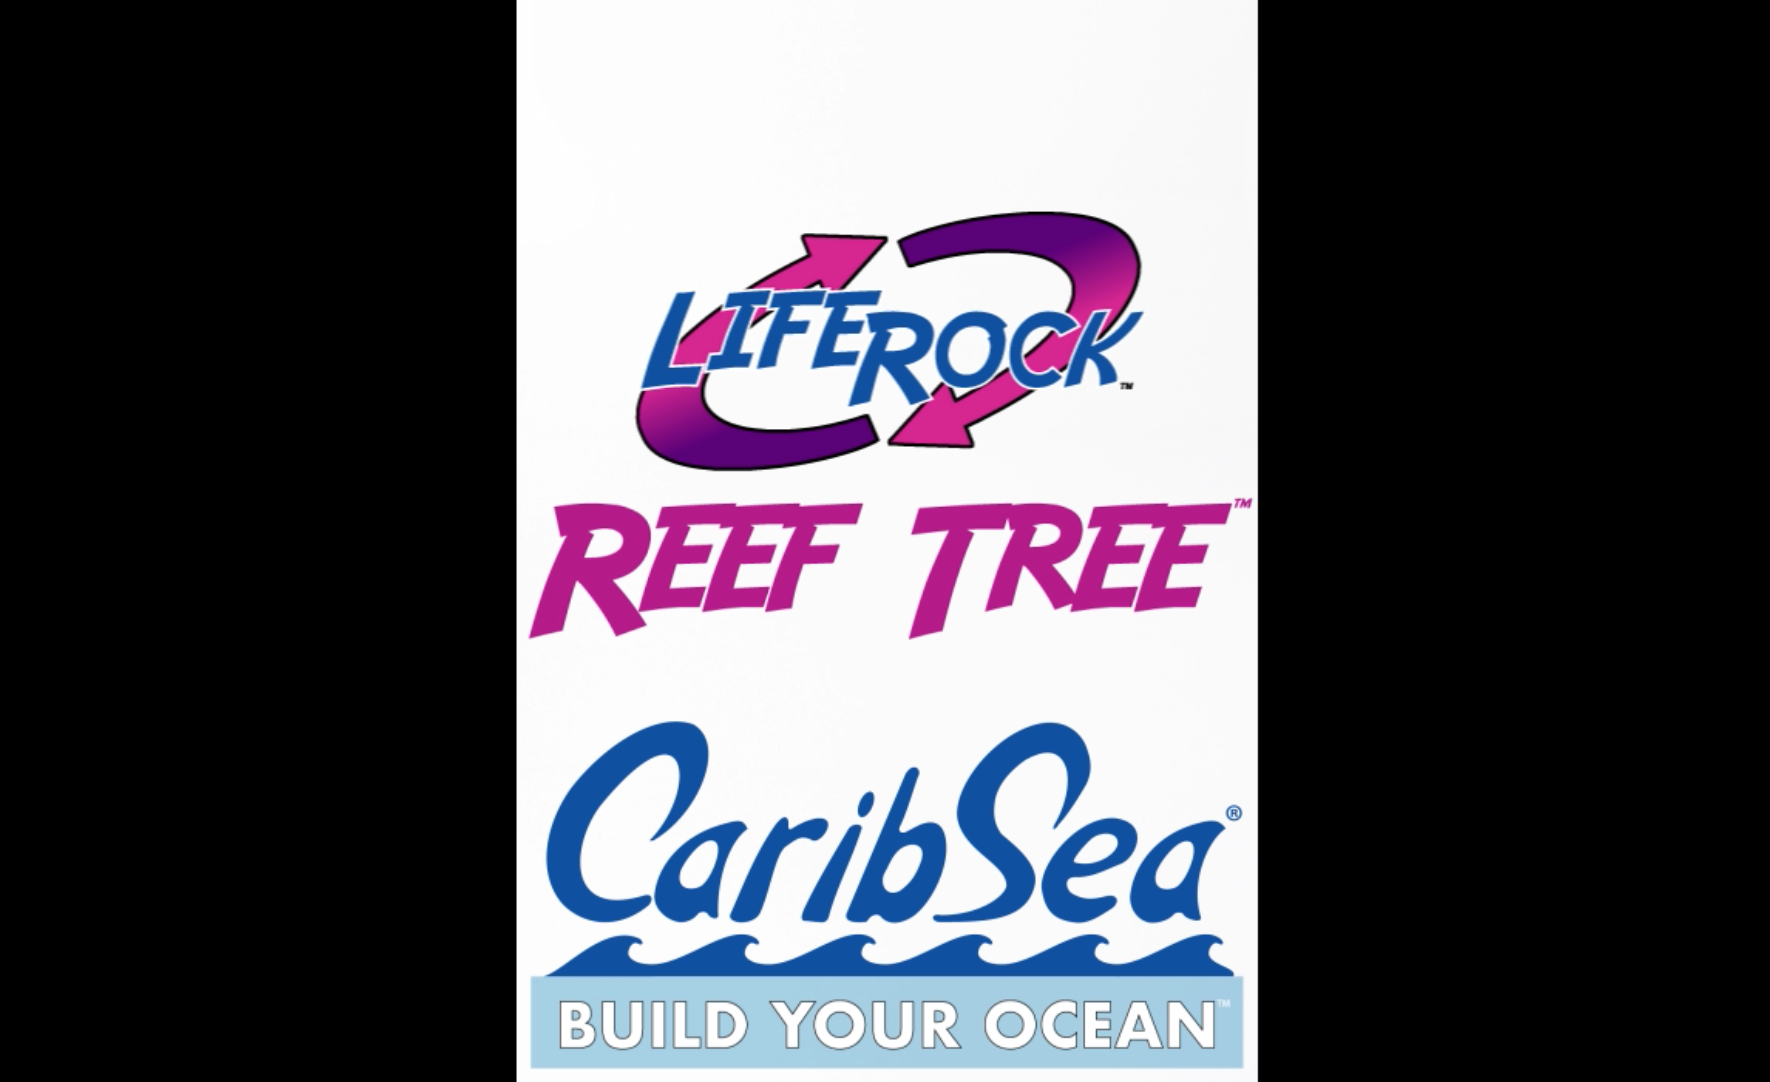 Video: mediafiles/Videos/150396/Reef-Tree-Spot-Mastered-Final-5-18-2020.mp4